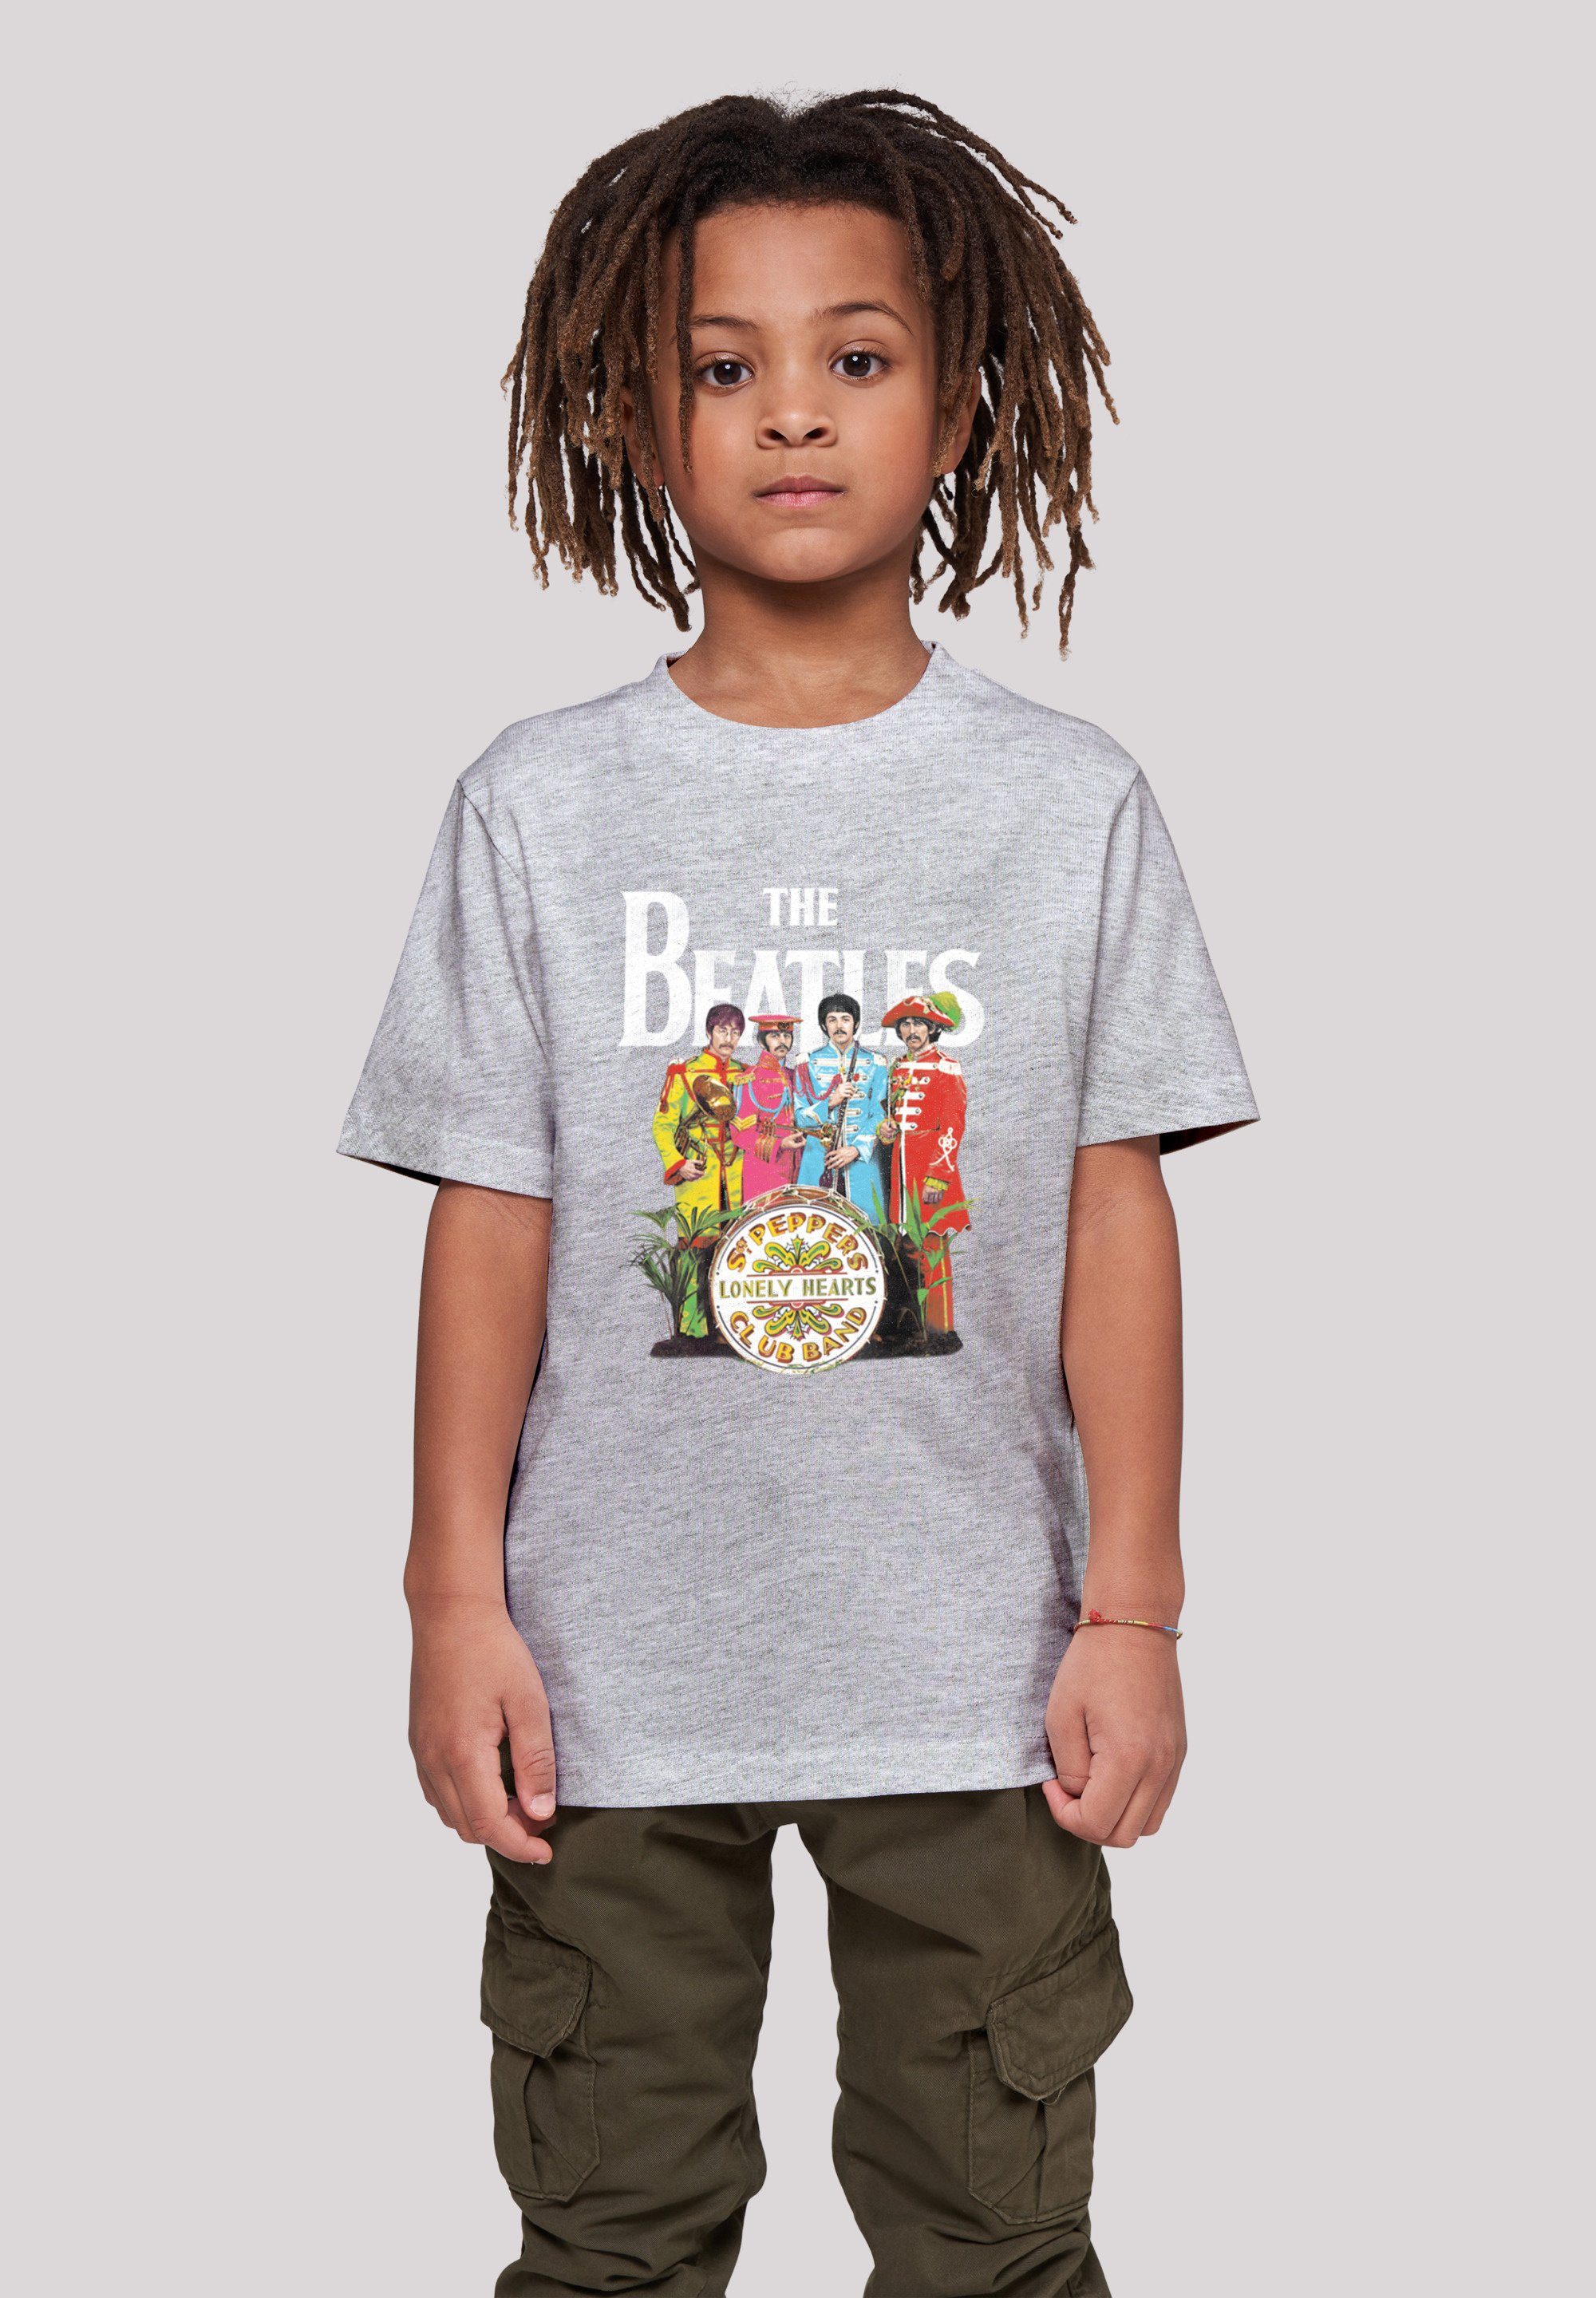 Black Sgt T-Shirt heather grey The Pepper Band F4NT4STIC Print Beatles